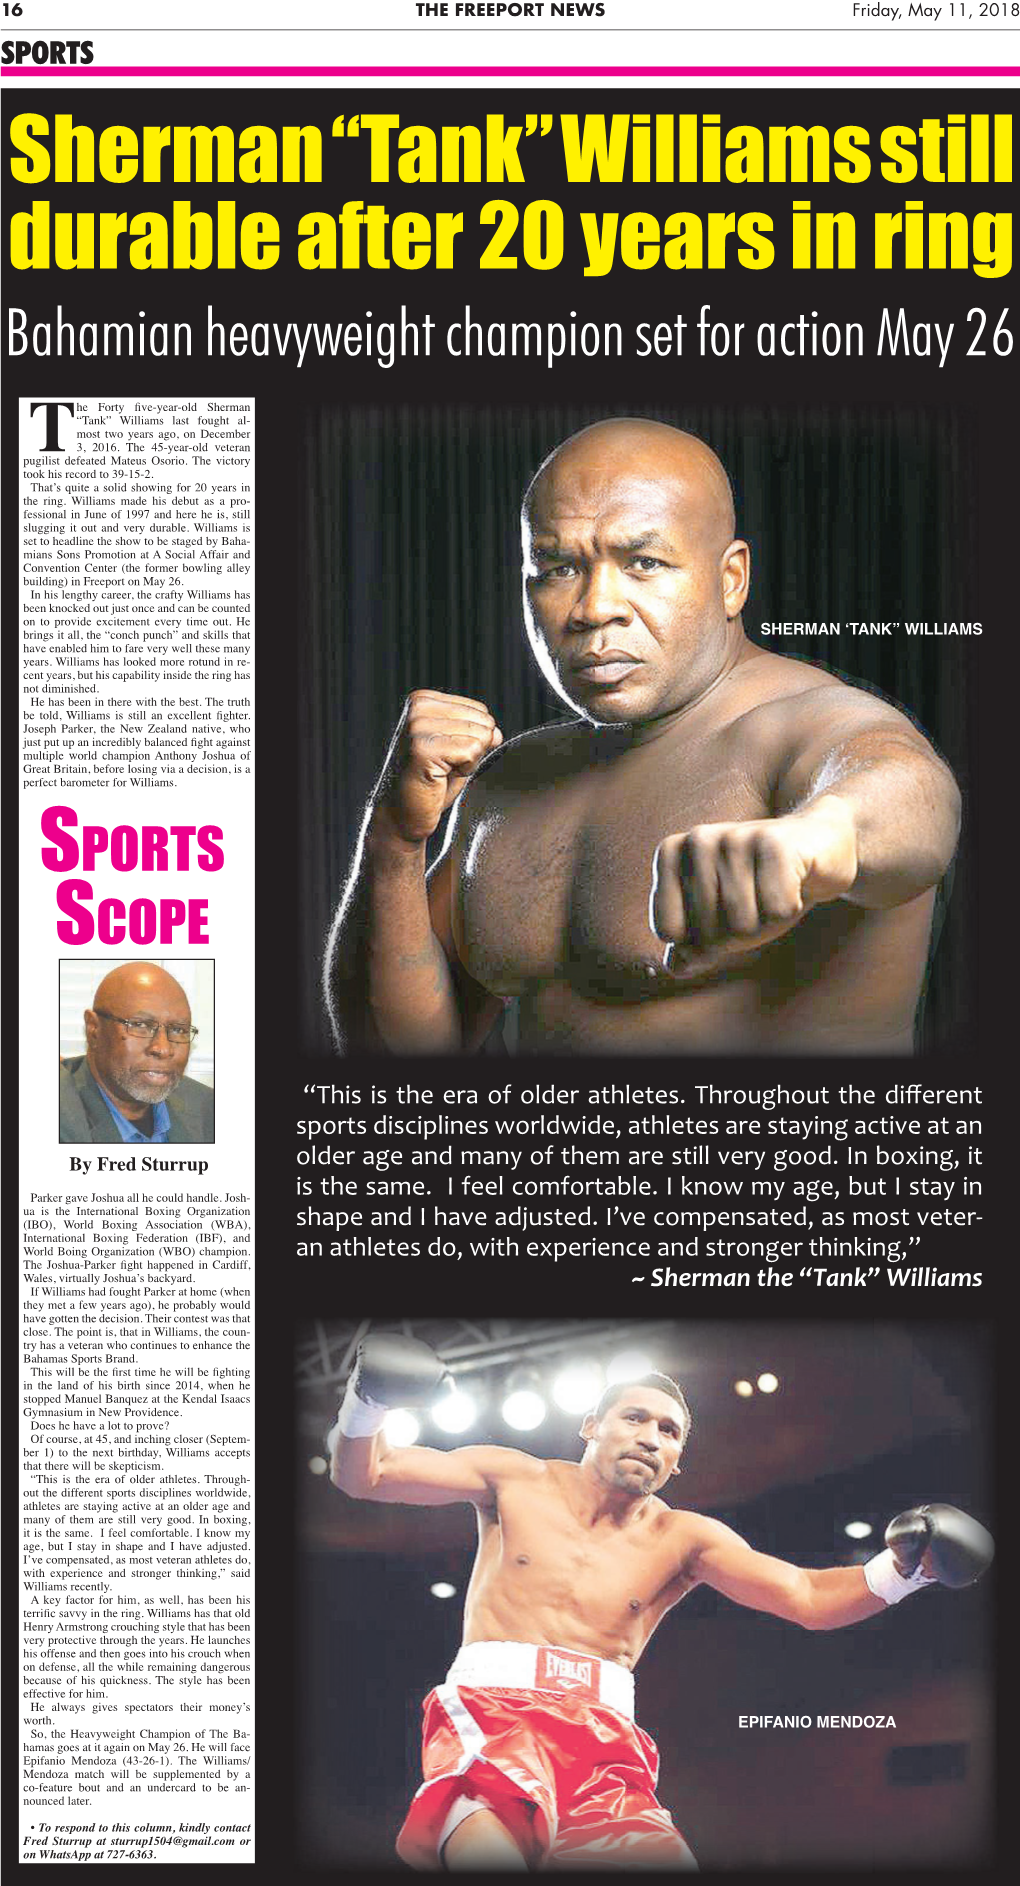 Bahamian Heavyweight Champion Set for Action May 26